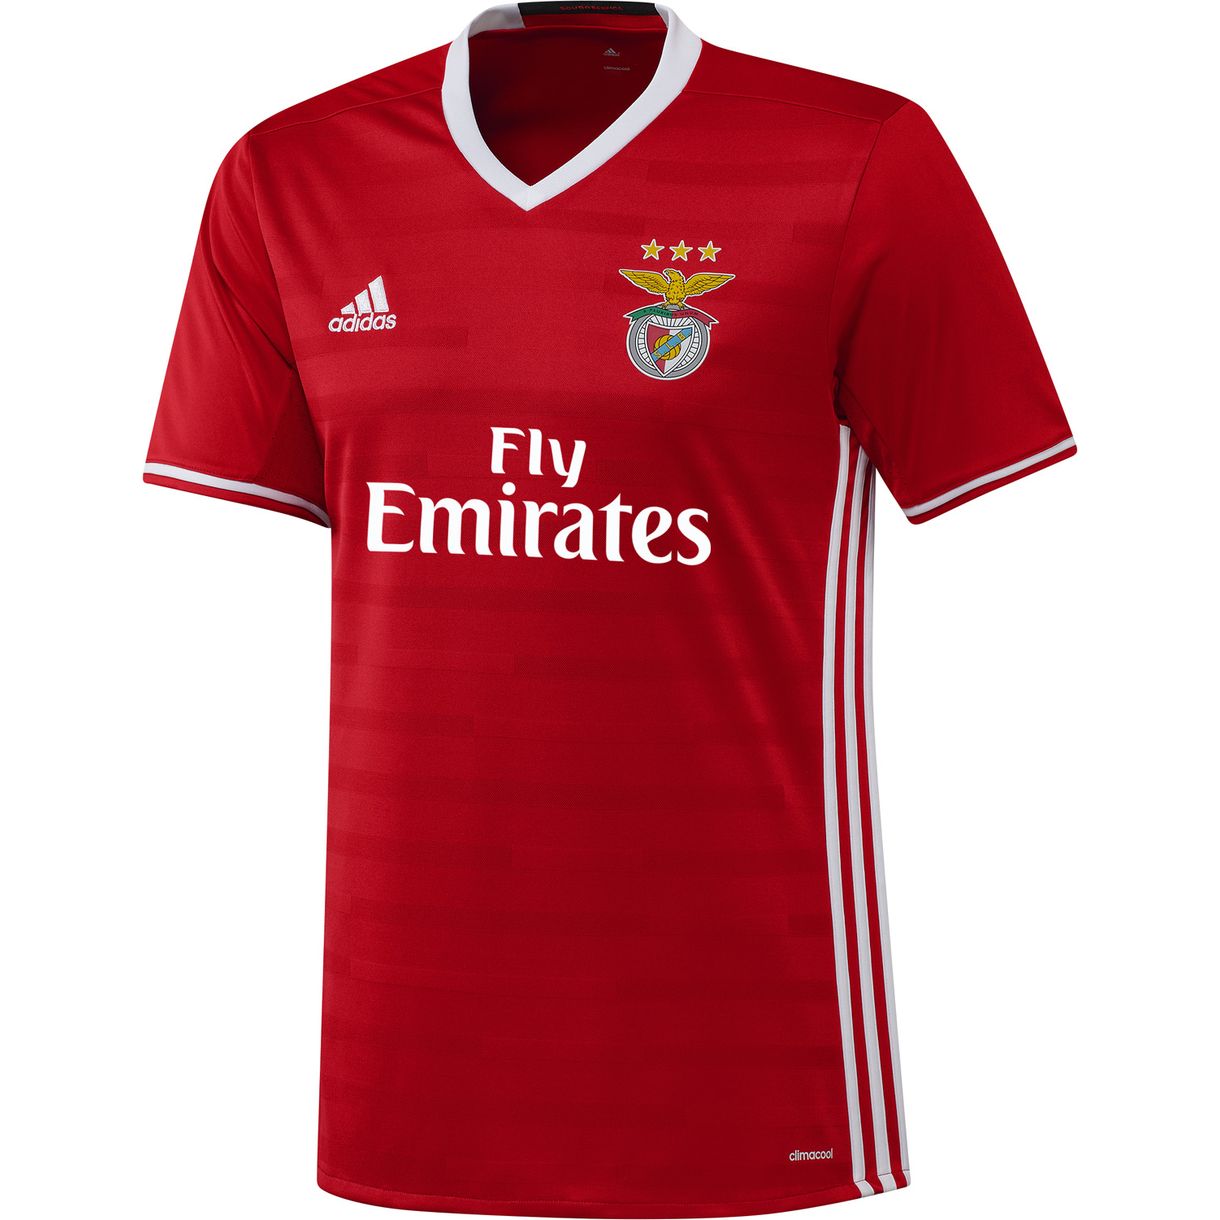 Benfica 16/17 Adidas Home Kit | 16/17 Kits | Football shirt blog